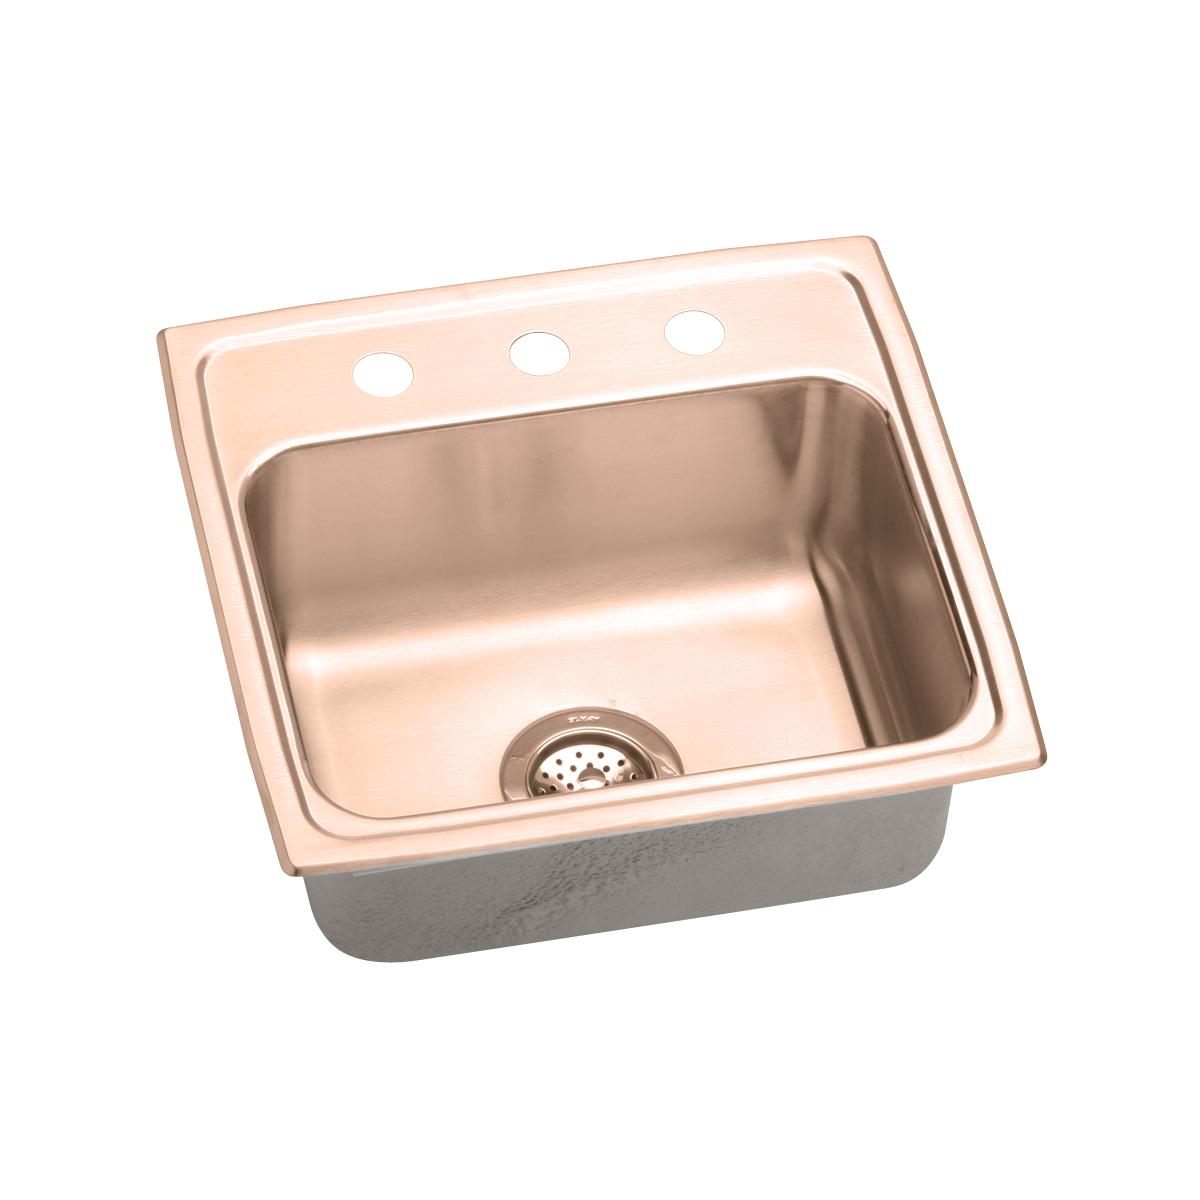 Elkay CuVerro Antimicrobial Copper 19-1/2" x 19" x 6-1/2" Single Bowl Drop-in ADA Sink